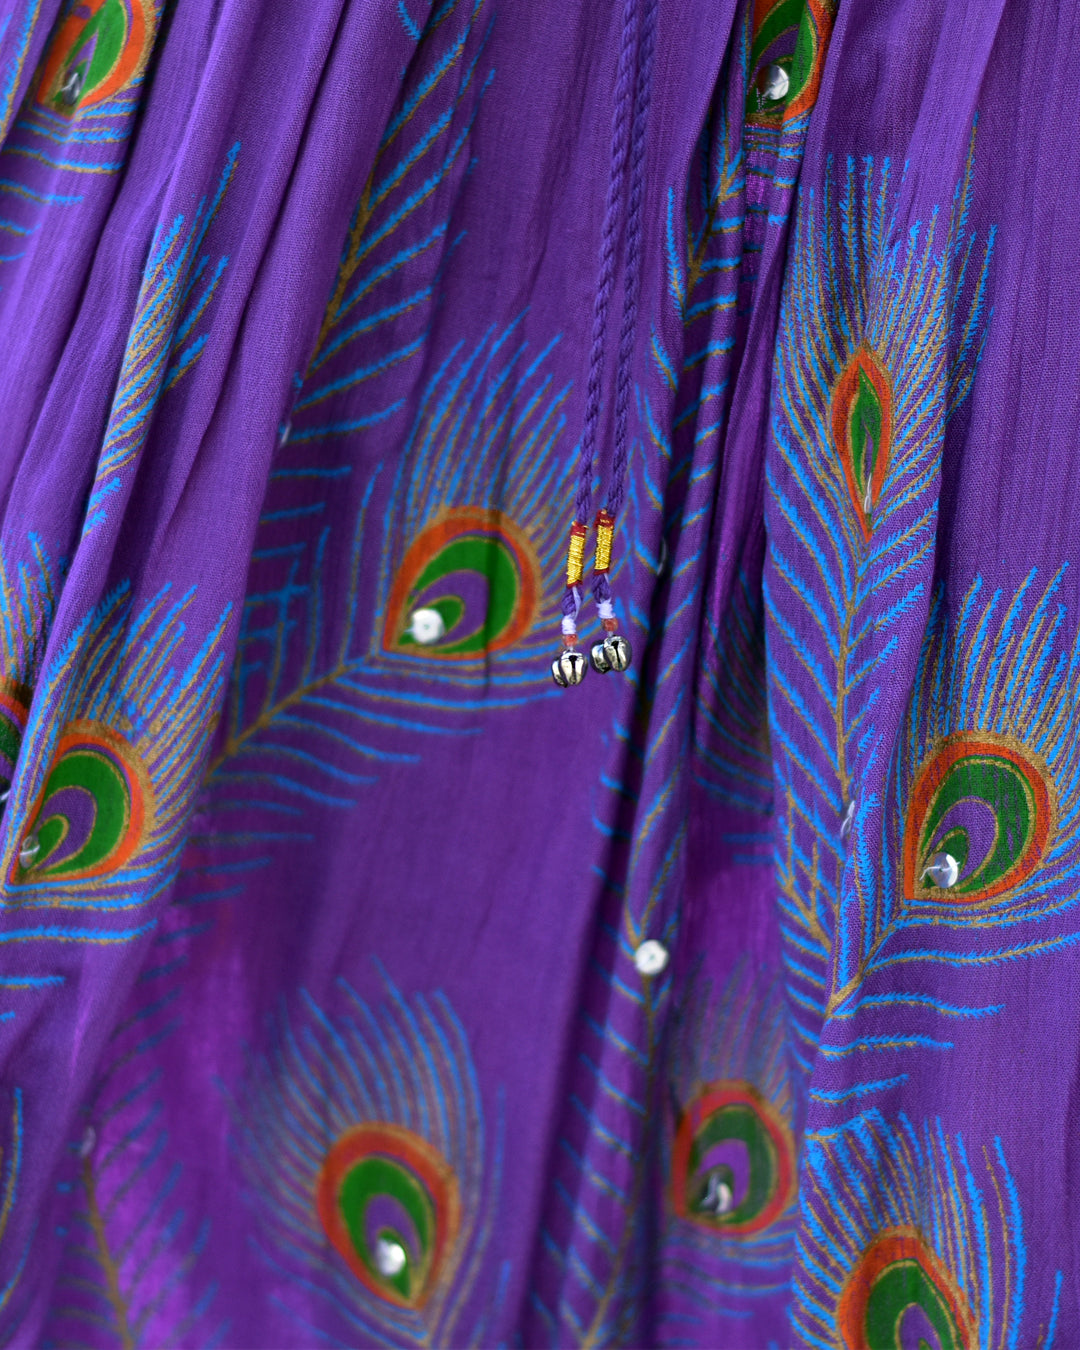 Sequin Peacock Print Crinkled Gypsy Skirt